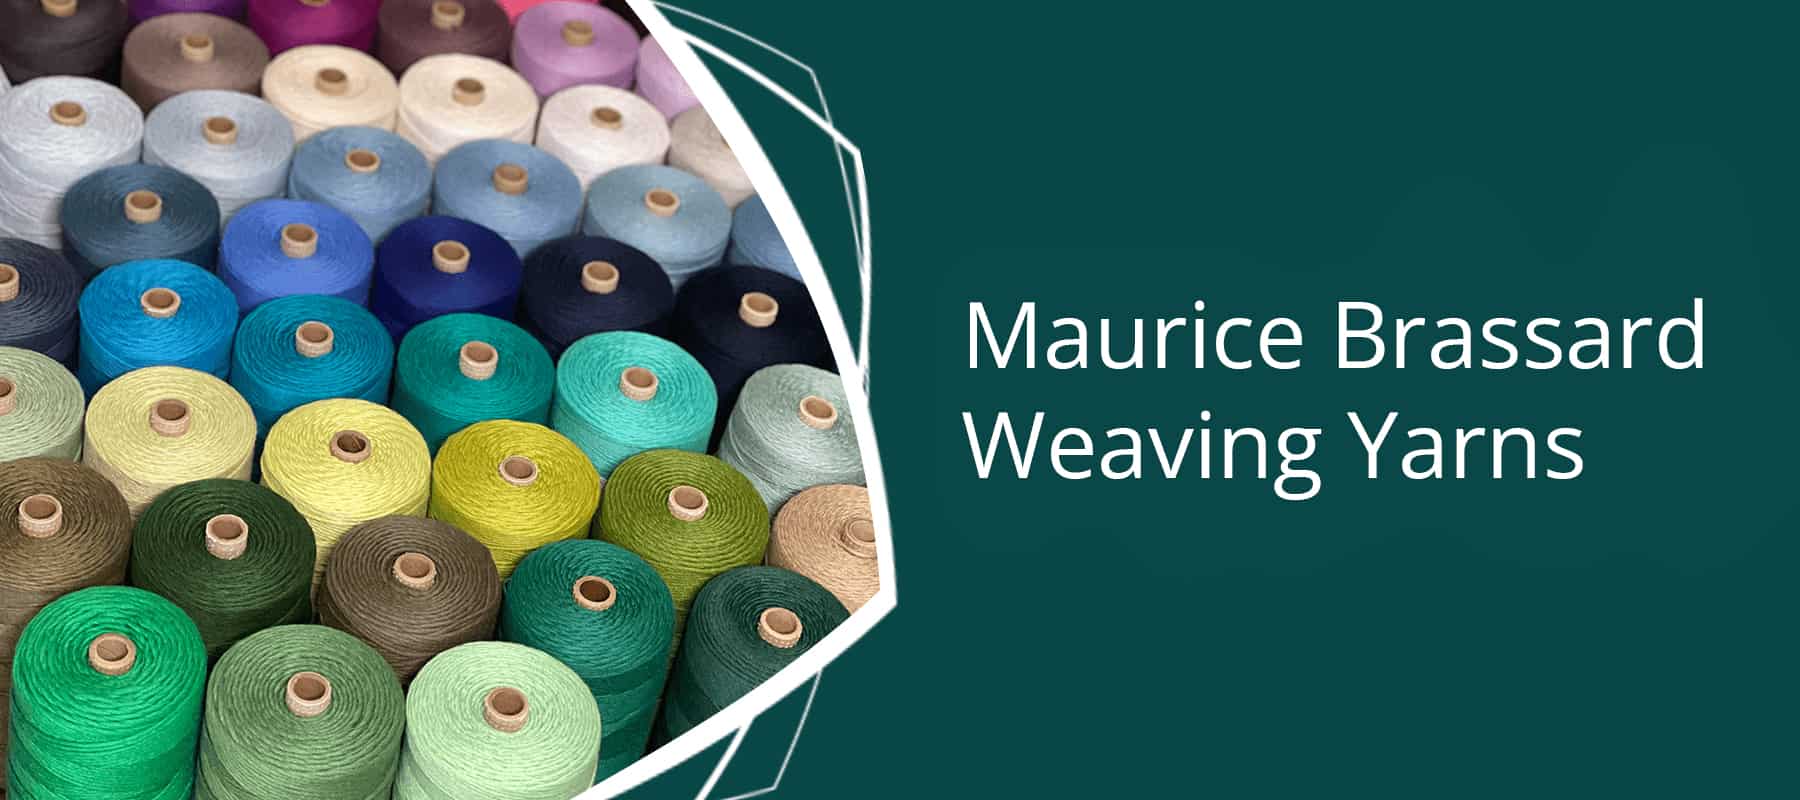 Maurice Brassard Quality Weaving Yarns - Thread Collective Australia 